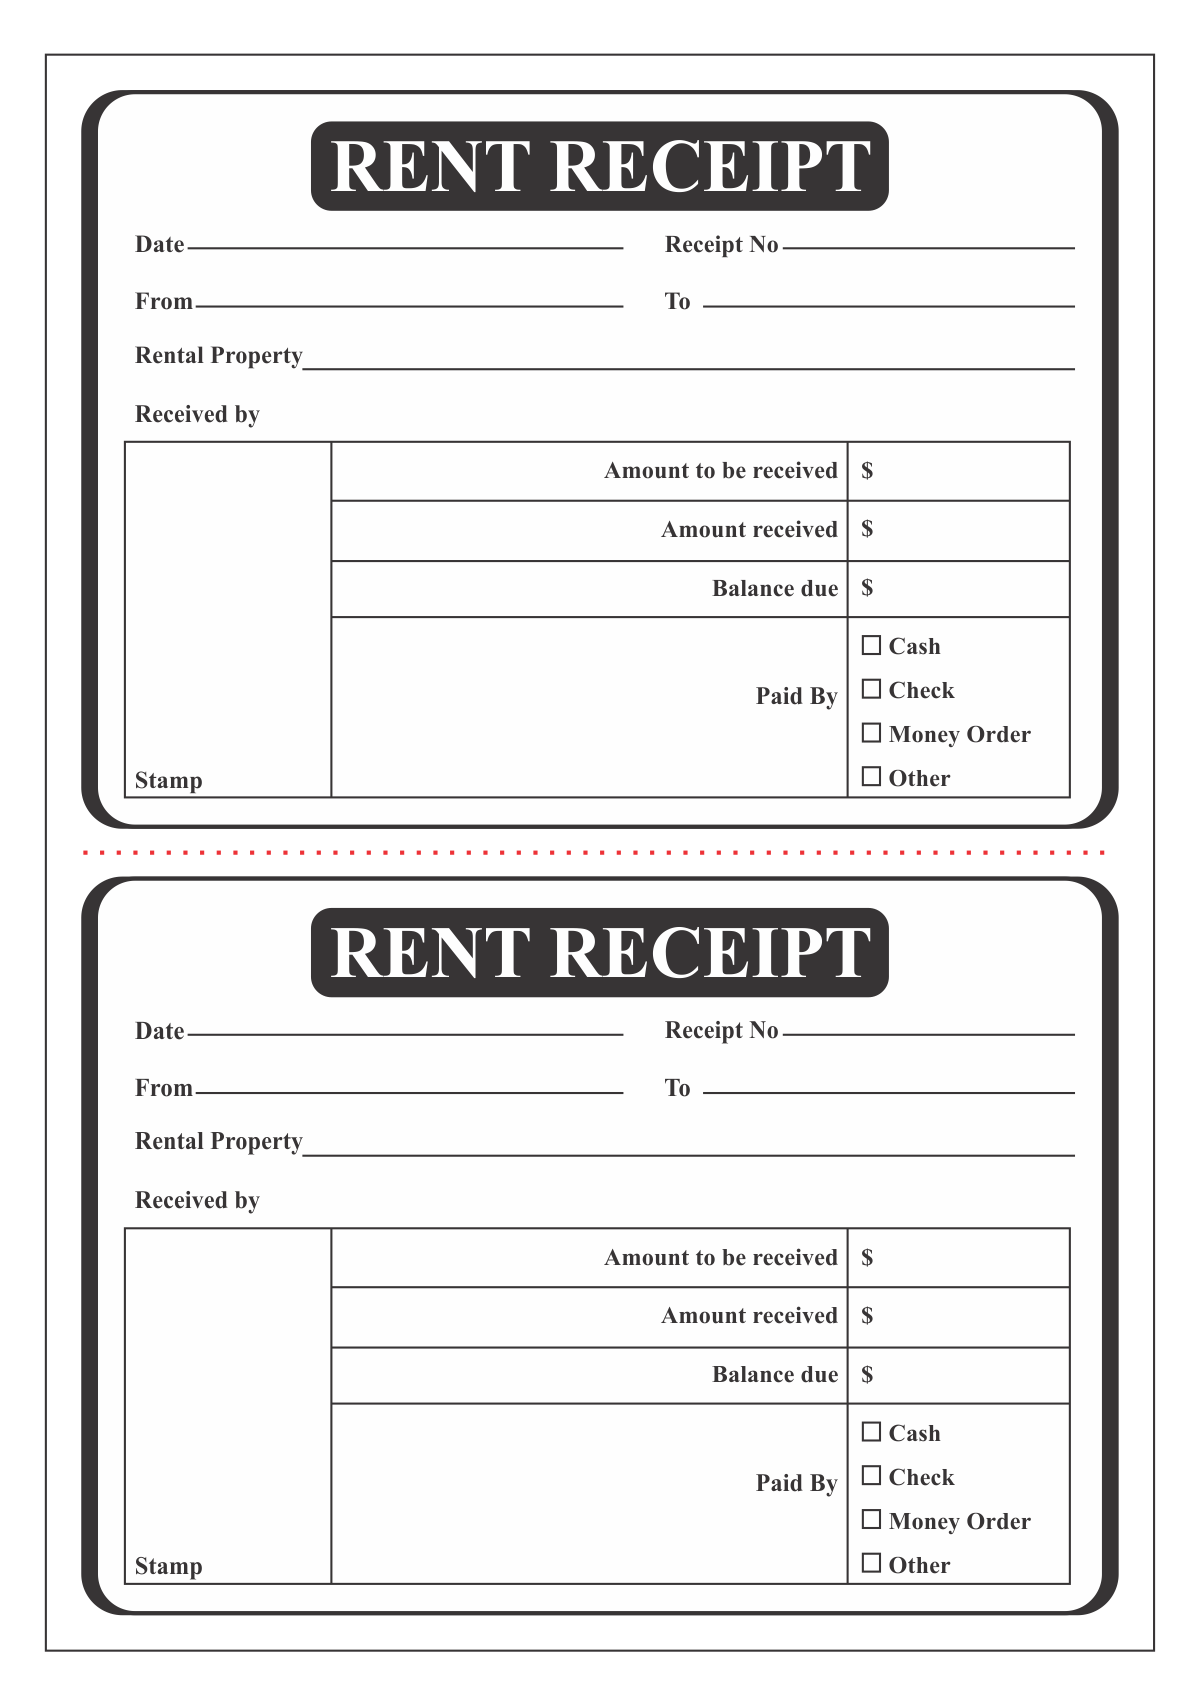 Custom Rental Receipt Carbon Copy Forms Printing